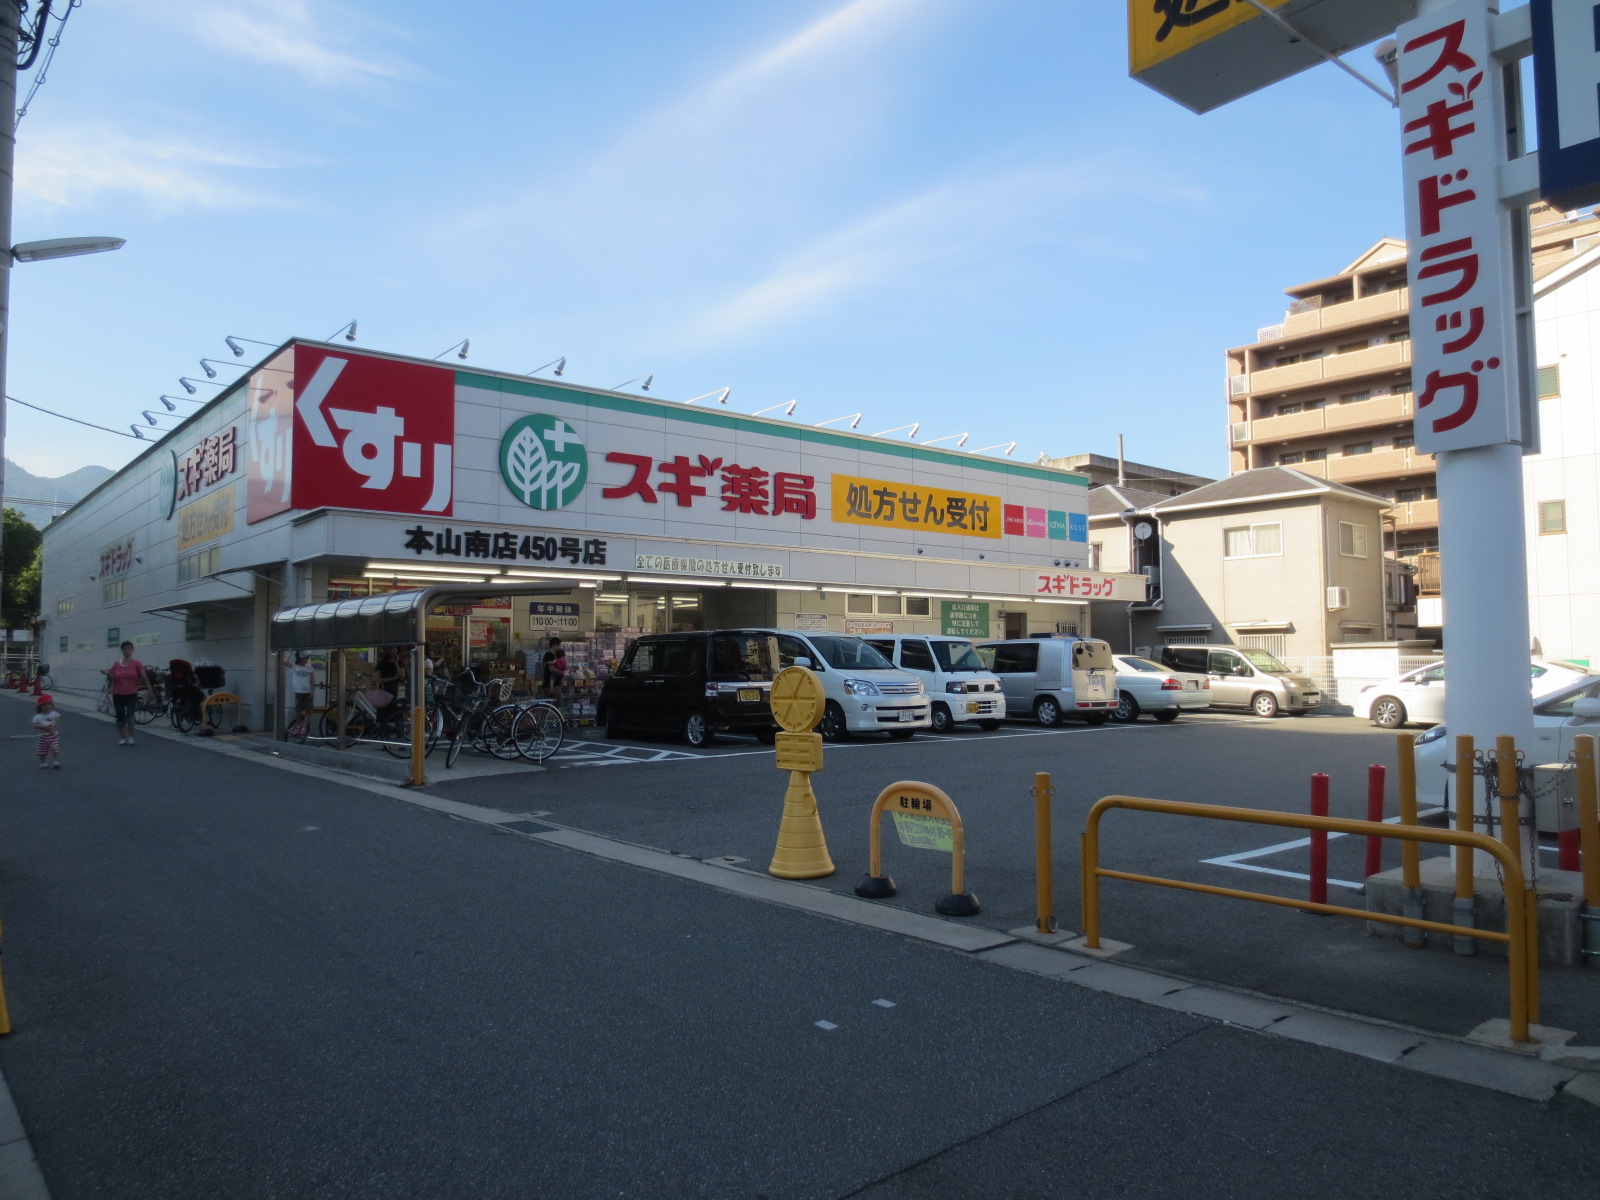 Dorakkusutoa. Cedar pharmacy Motoyamaminami shop 599m until (drugstore)